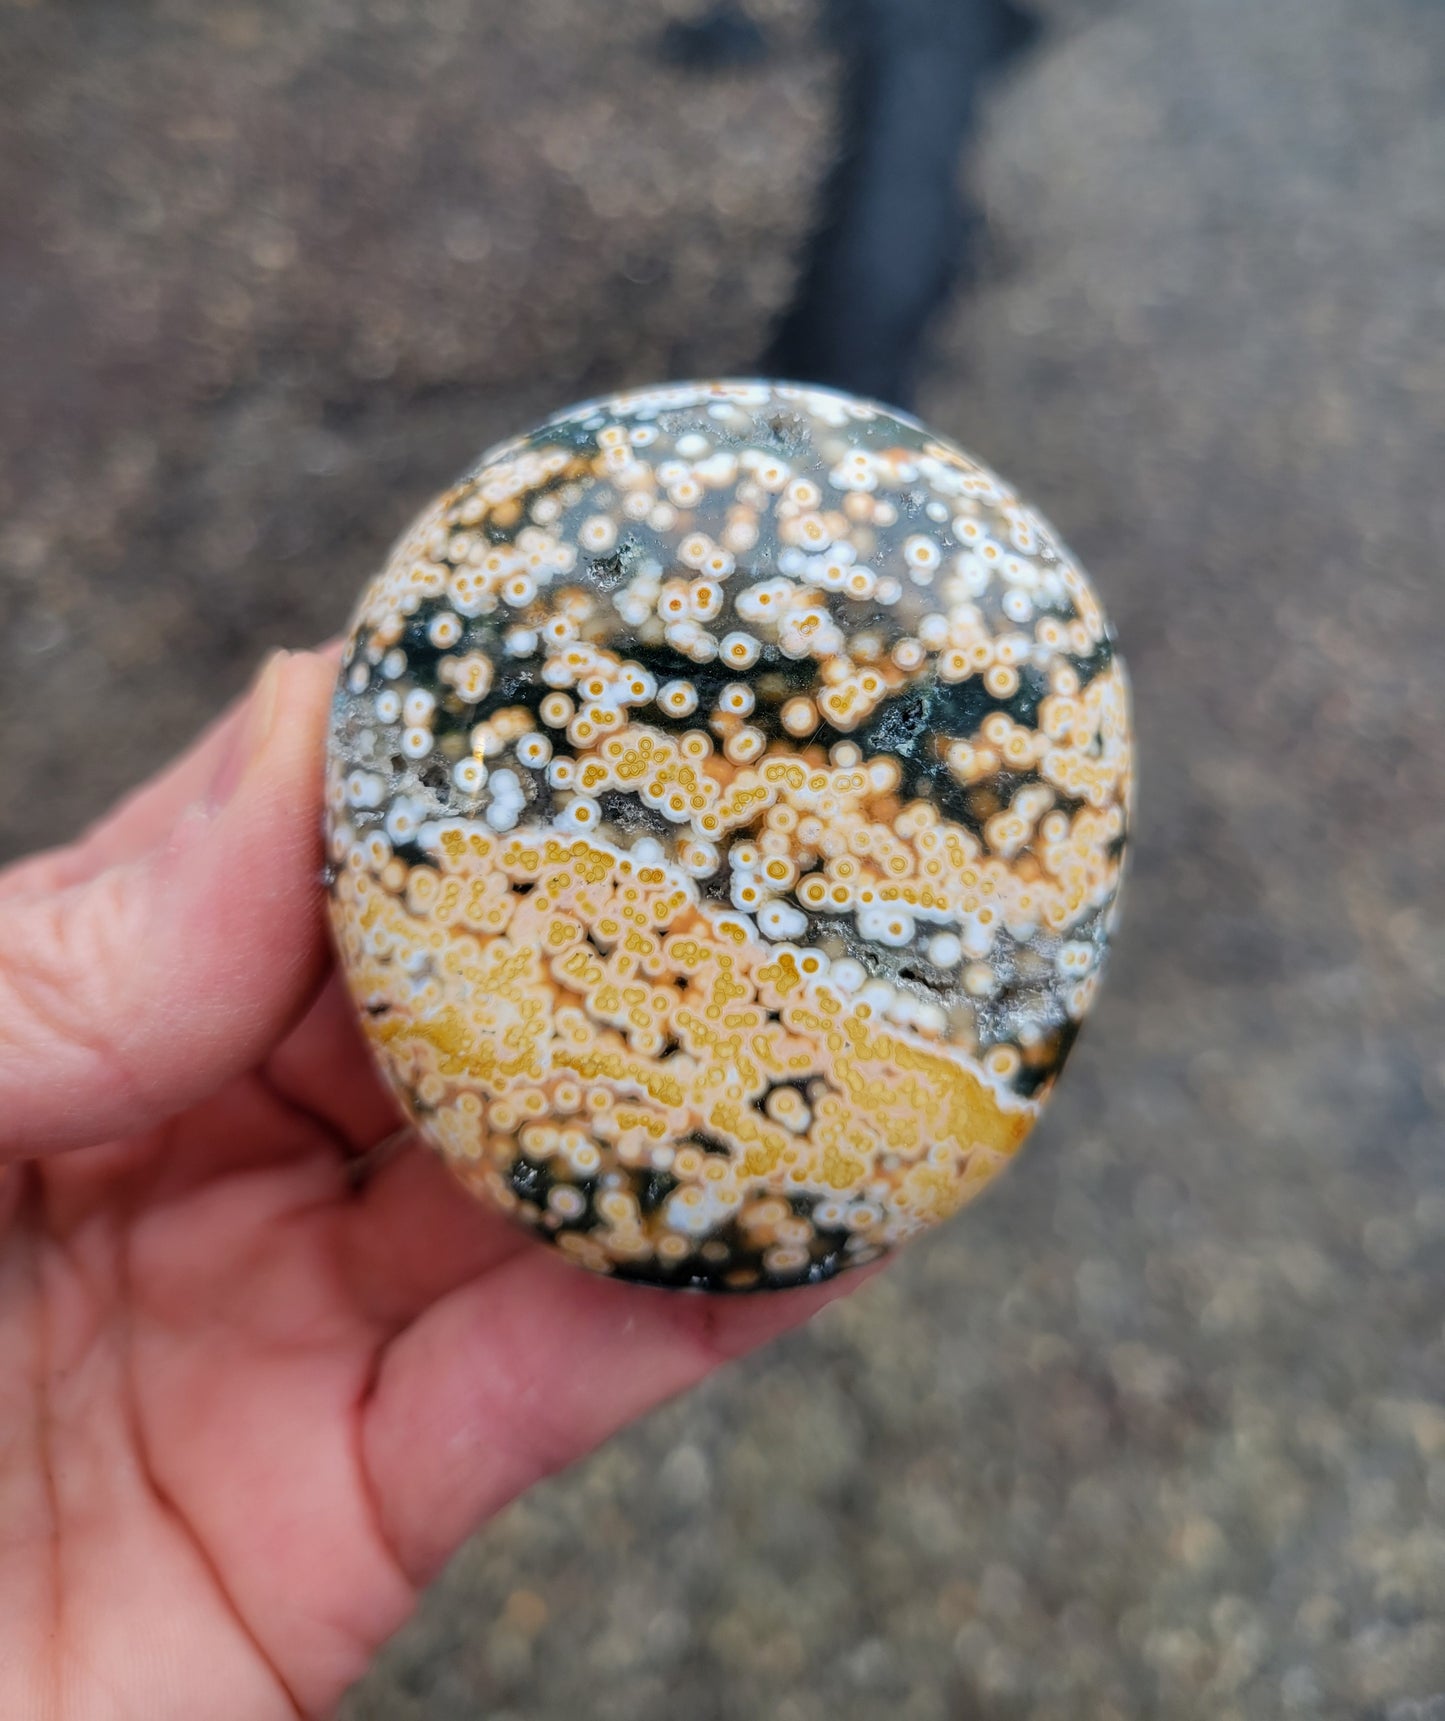 Ocean Jasper Palm Stone from Madagascar